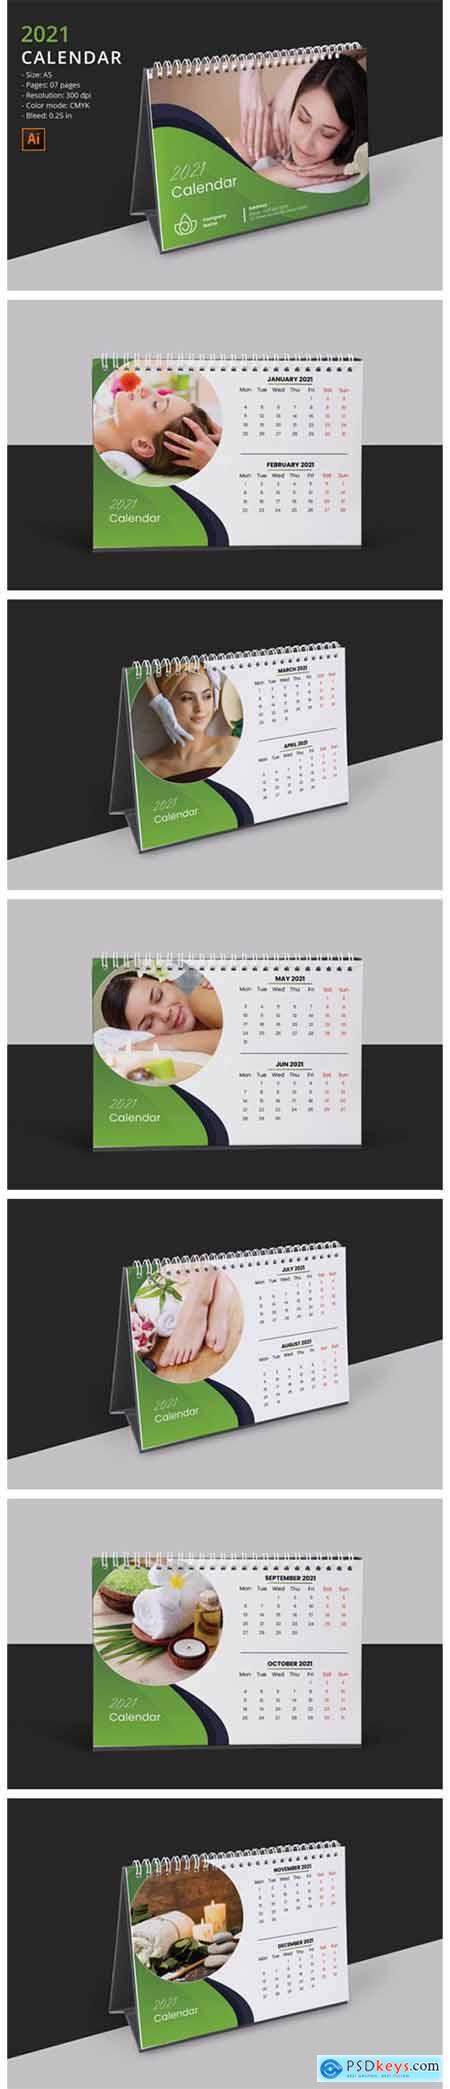 2021 Desk Calendar Template 6088269